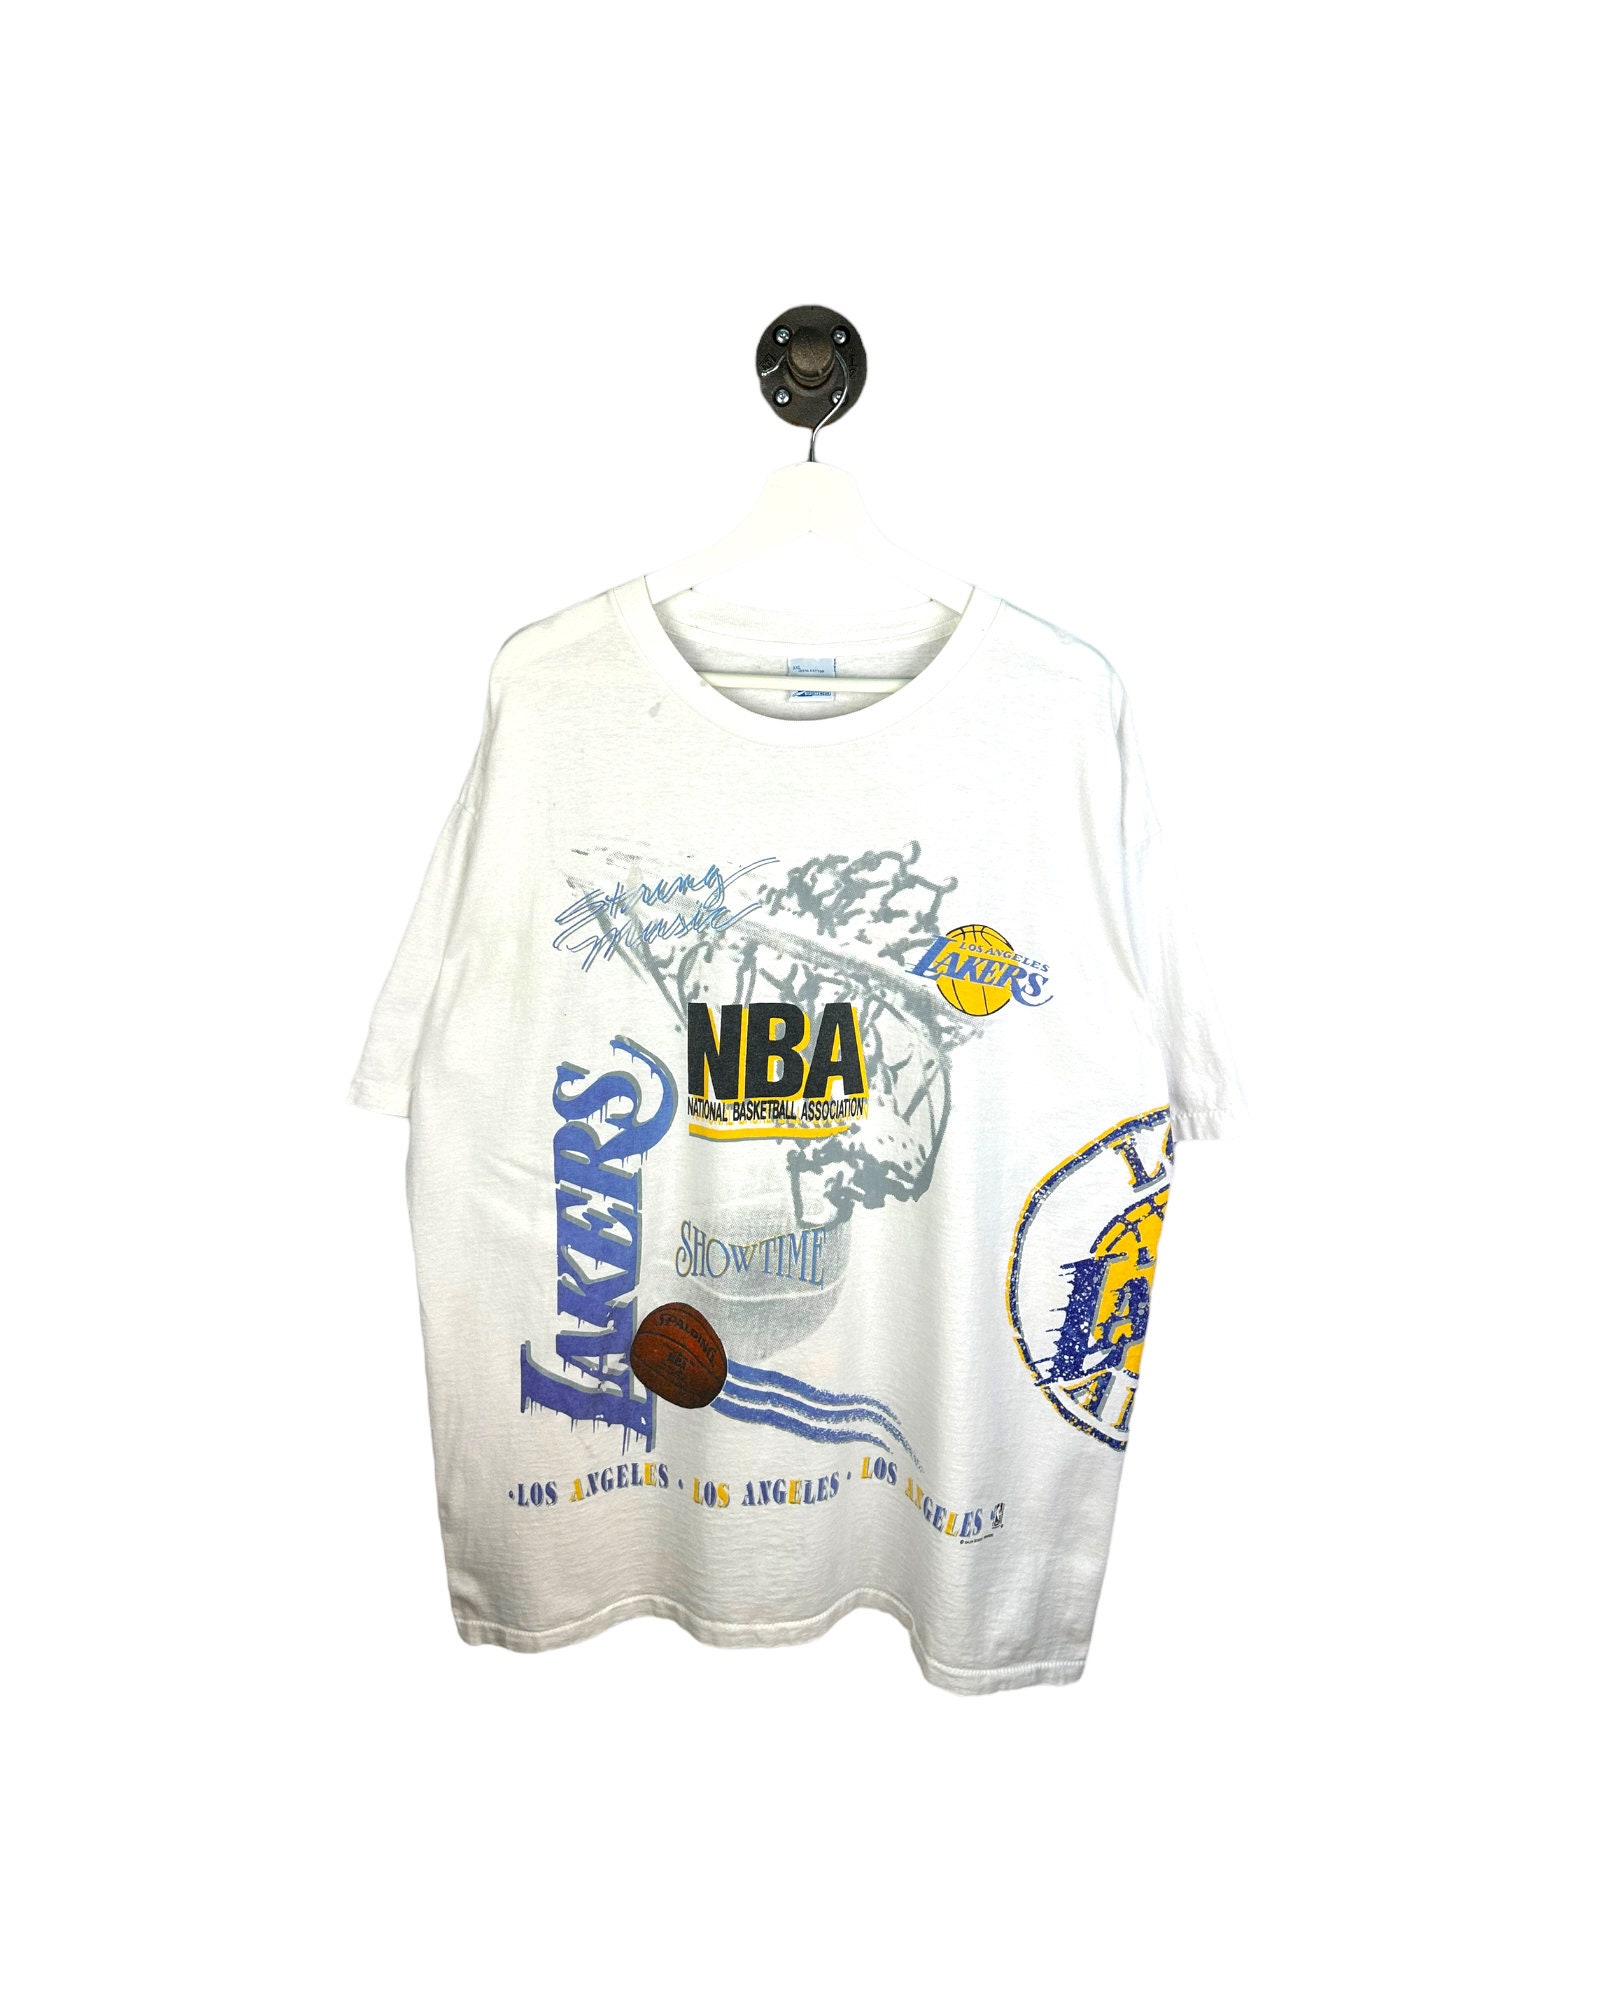 Anthony Davis New Orleans Pelicans T shirt. Worn a - Depop